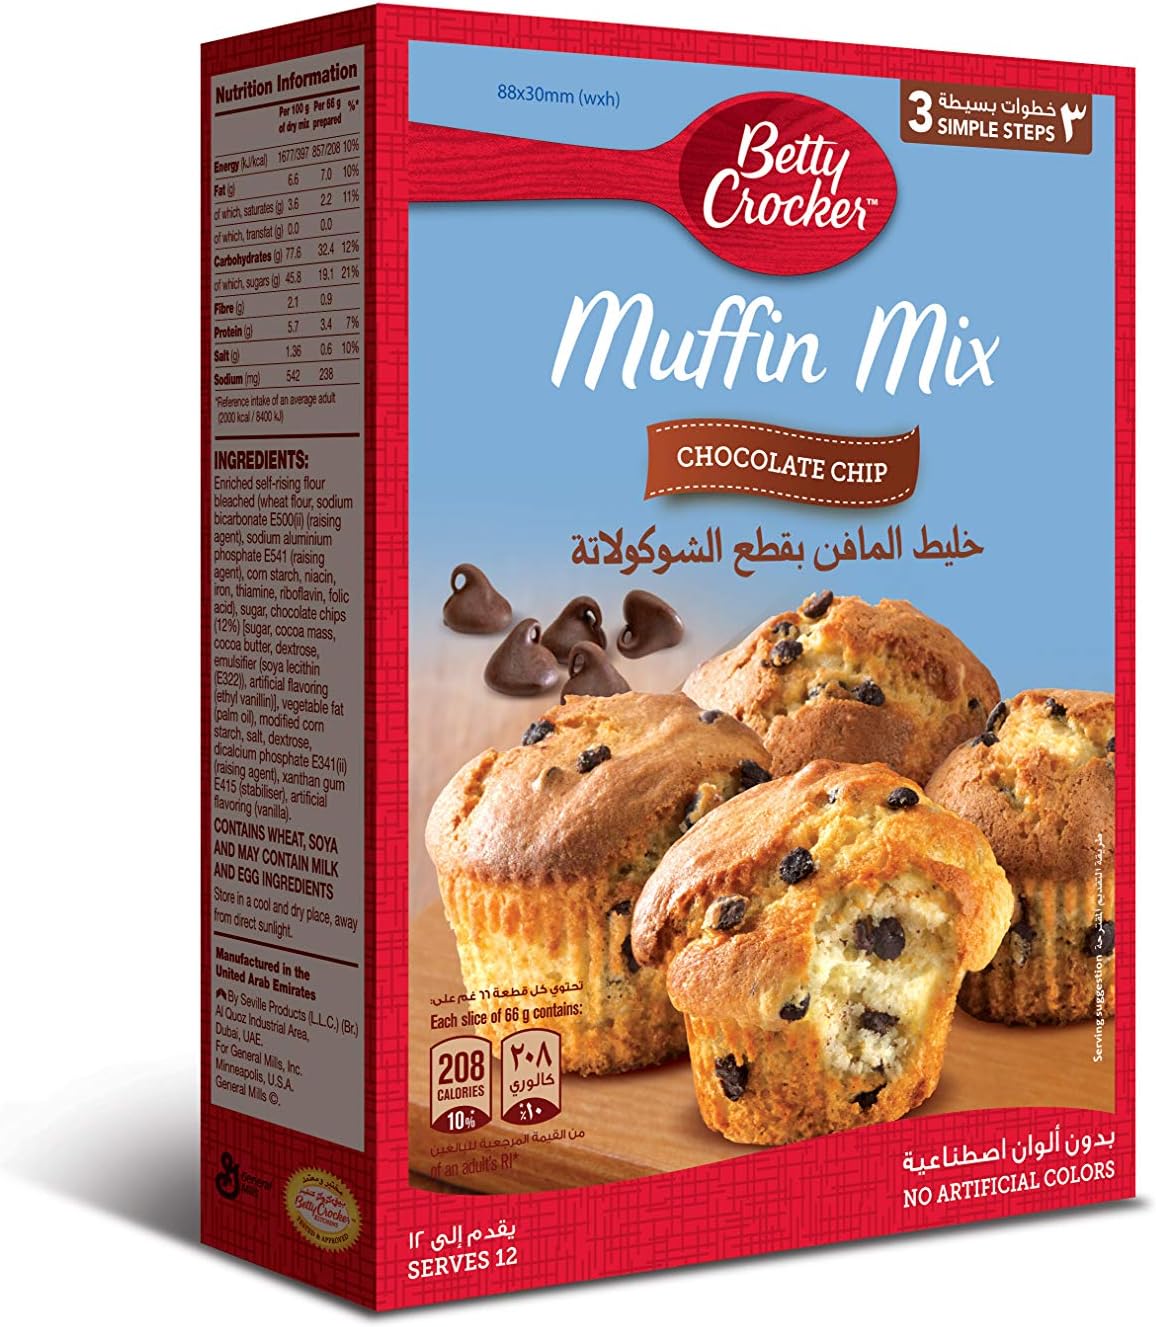 Betty crocker chocolate chip muffin mix, 500 gm